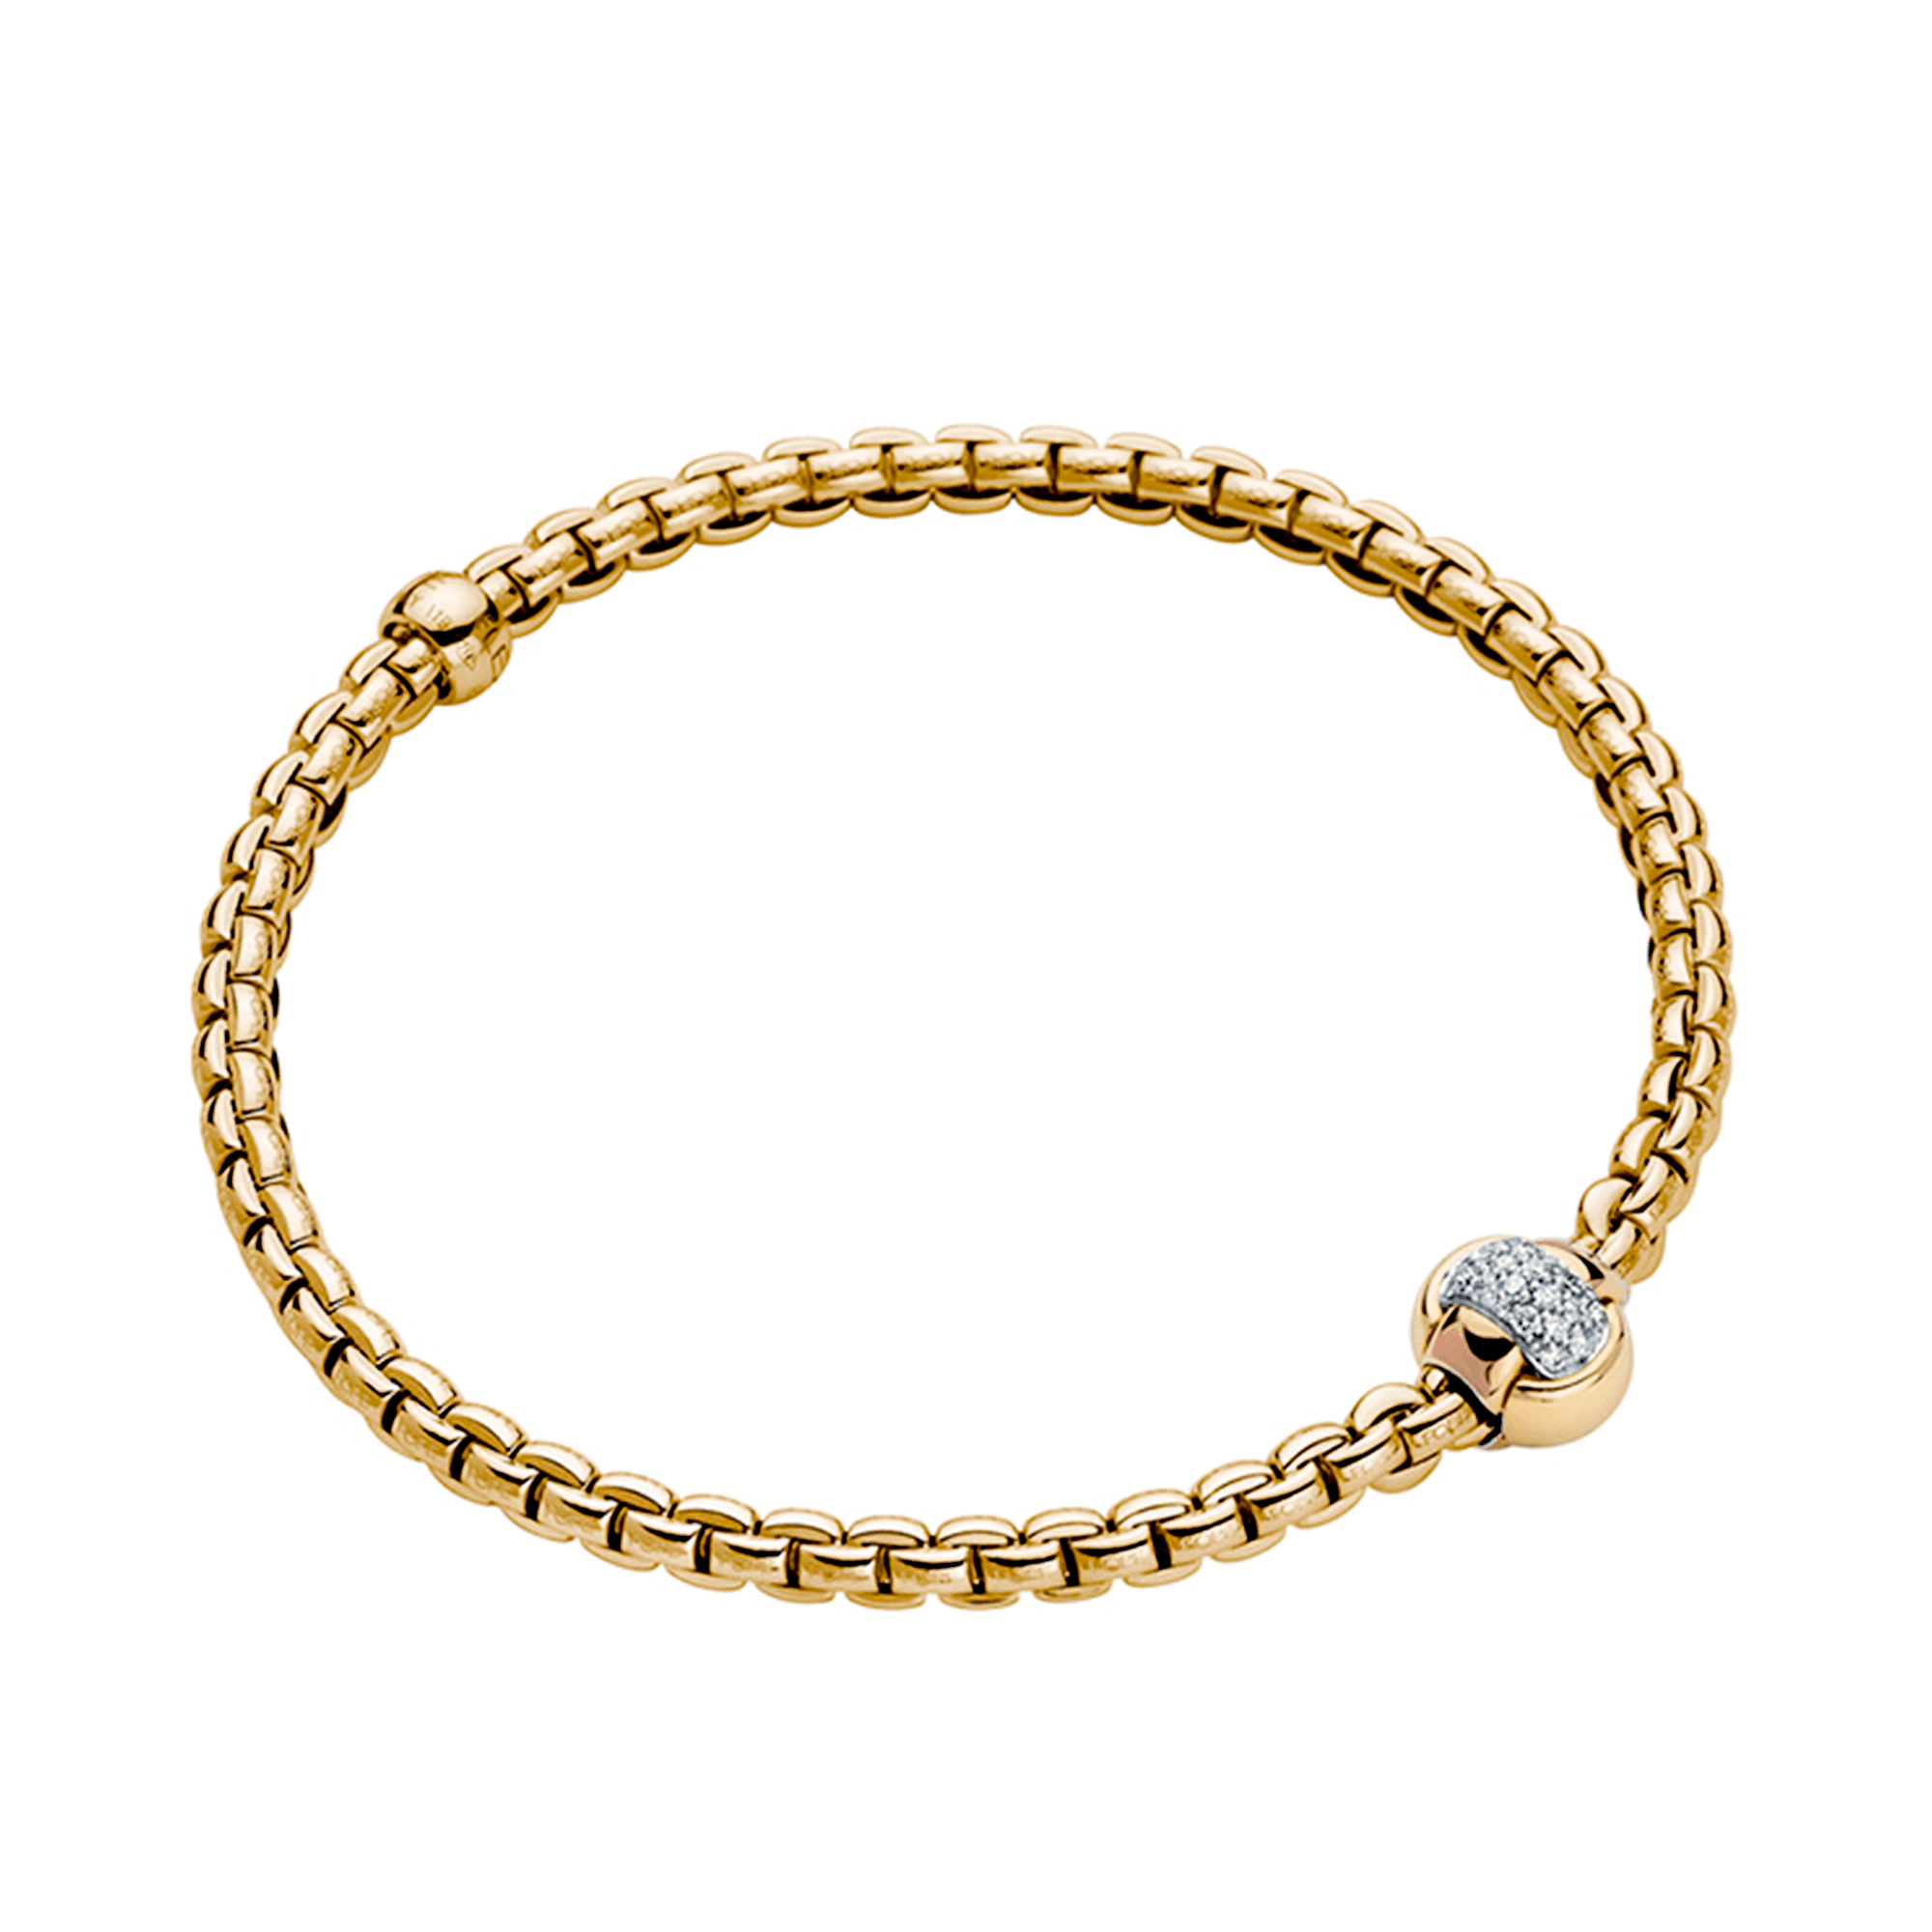 Eka Tiny 18ct Yellow Gold Bracelet With Pave Diamond Set Rondel